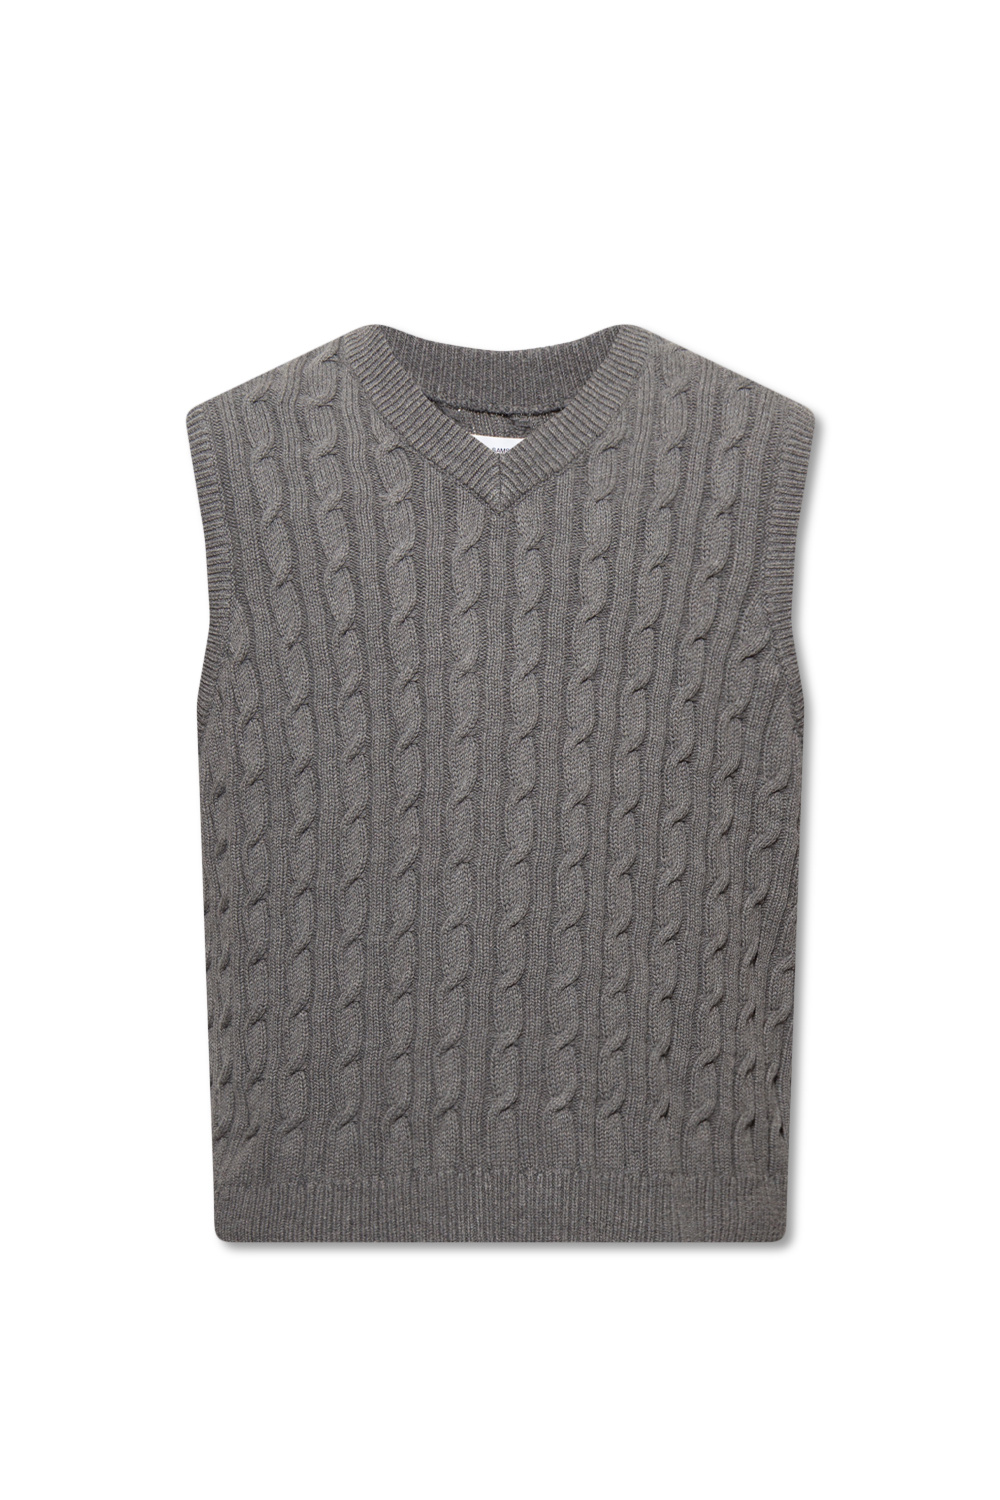 Samsøe & Samsøe Wool kenly Vest in Grey Mens Clothing T-shirts Sleeveless t-shirts for Men Grey 